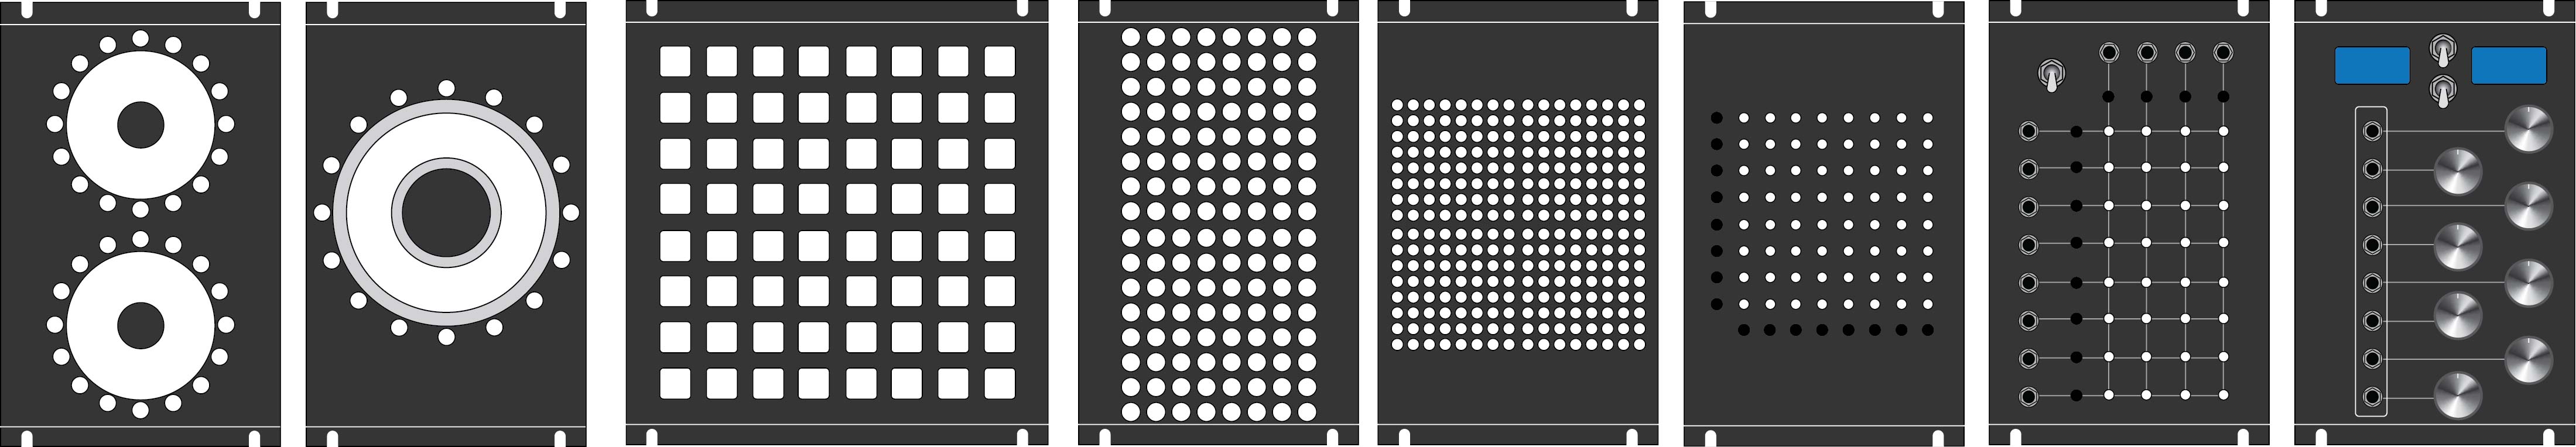 neonking:modulbox-panels2.jpg